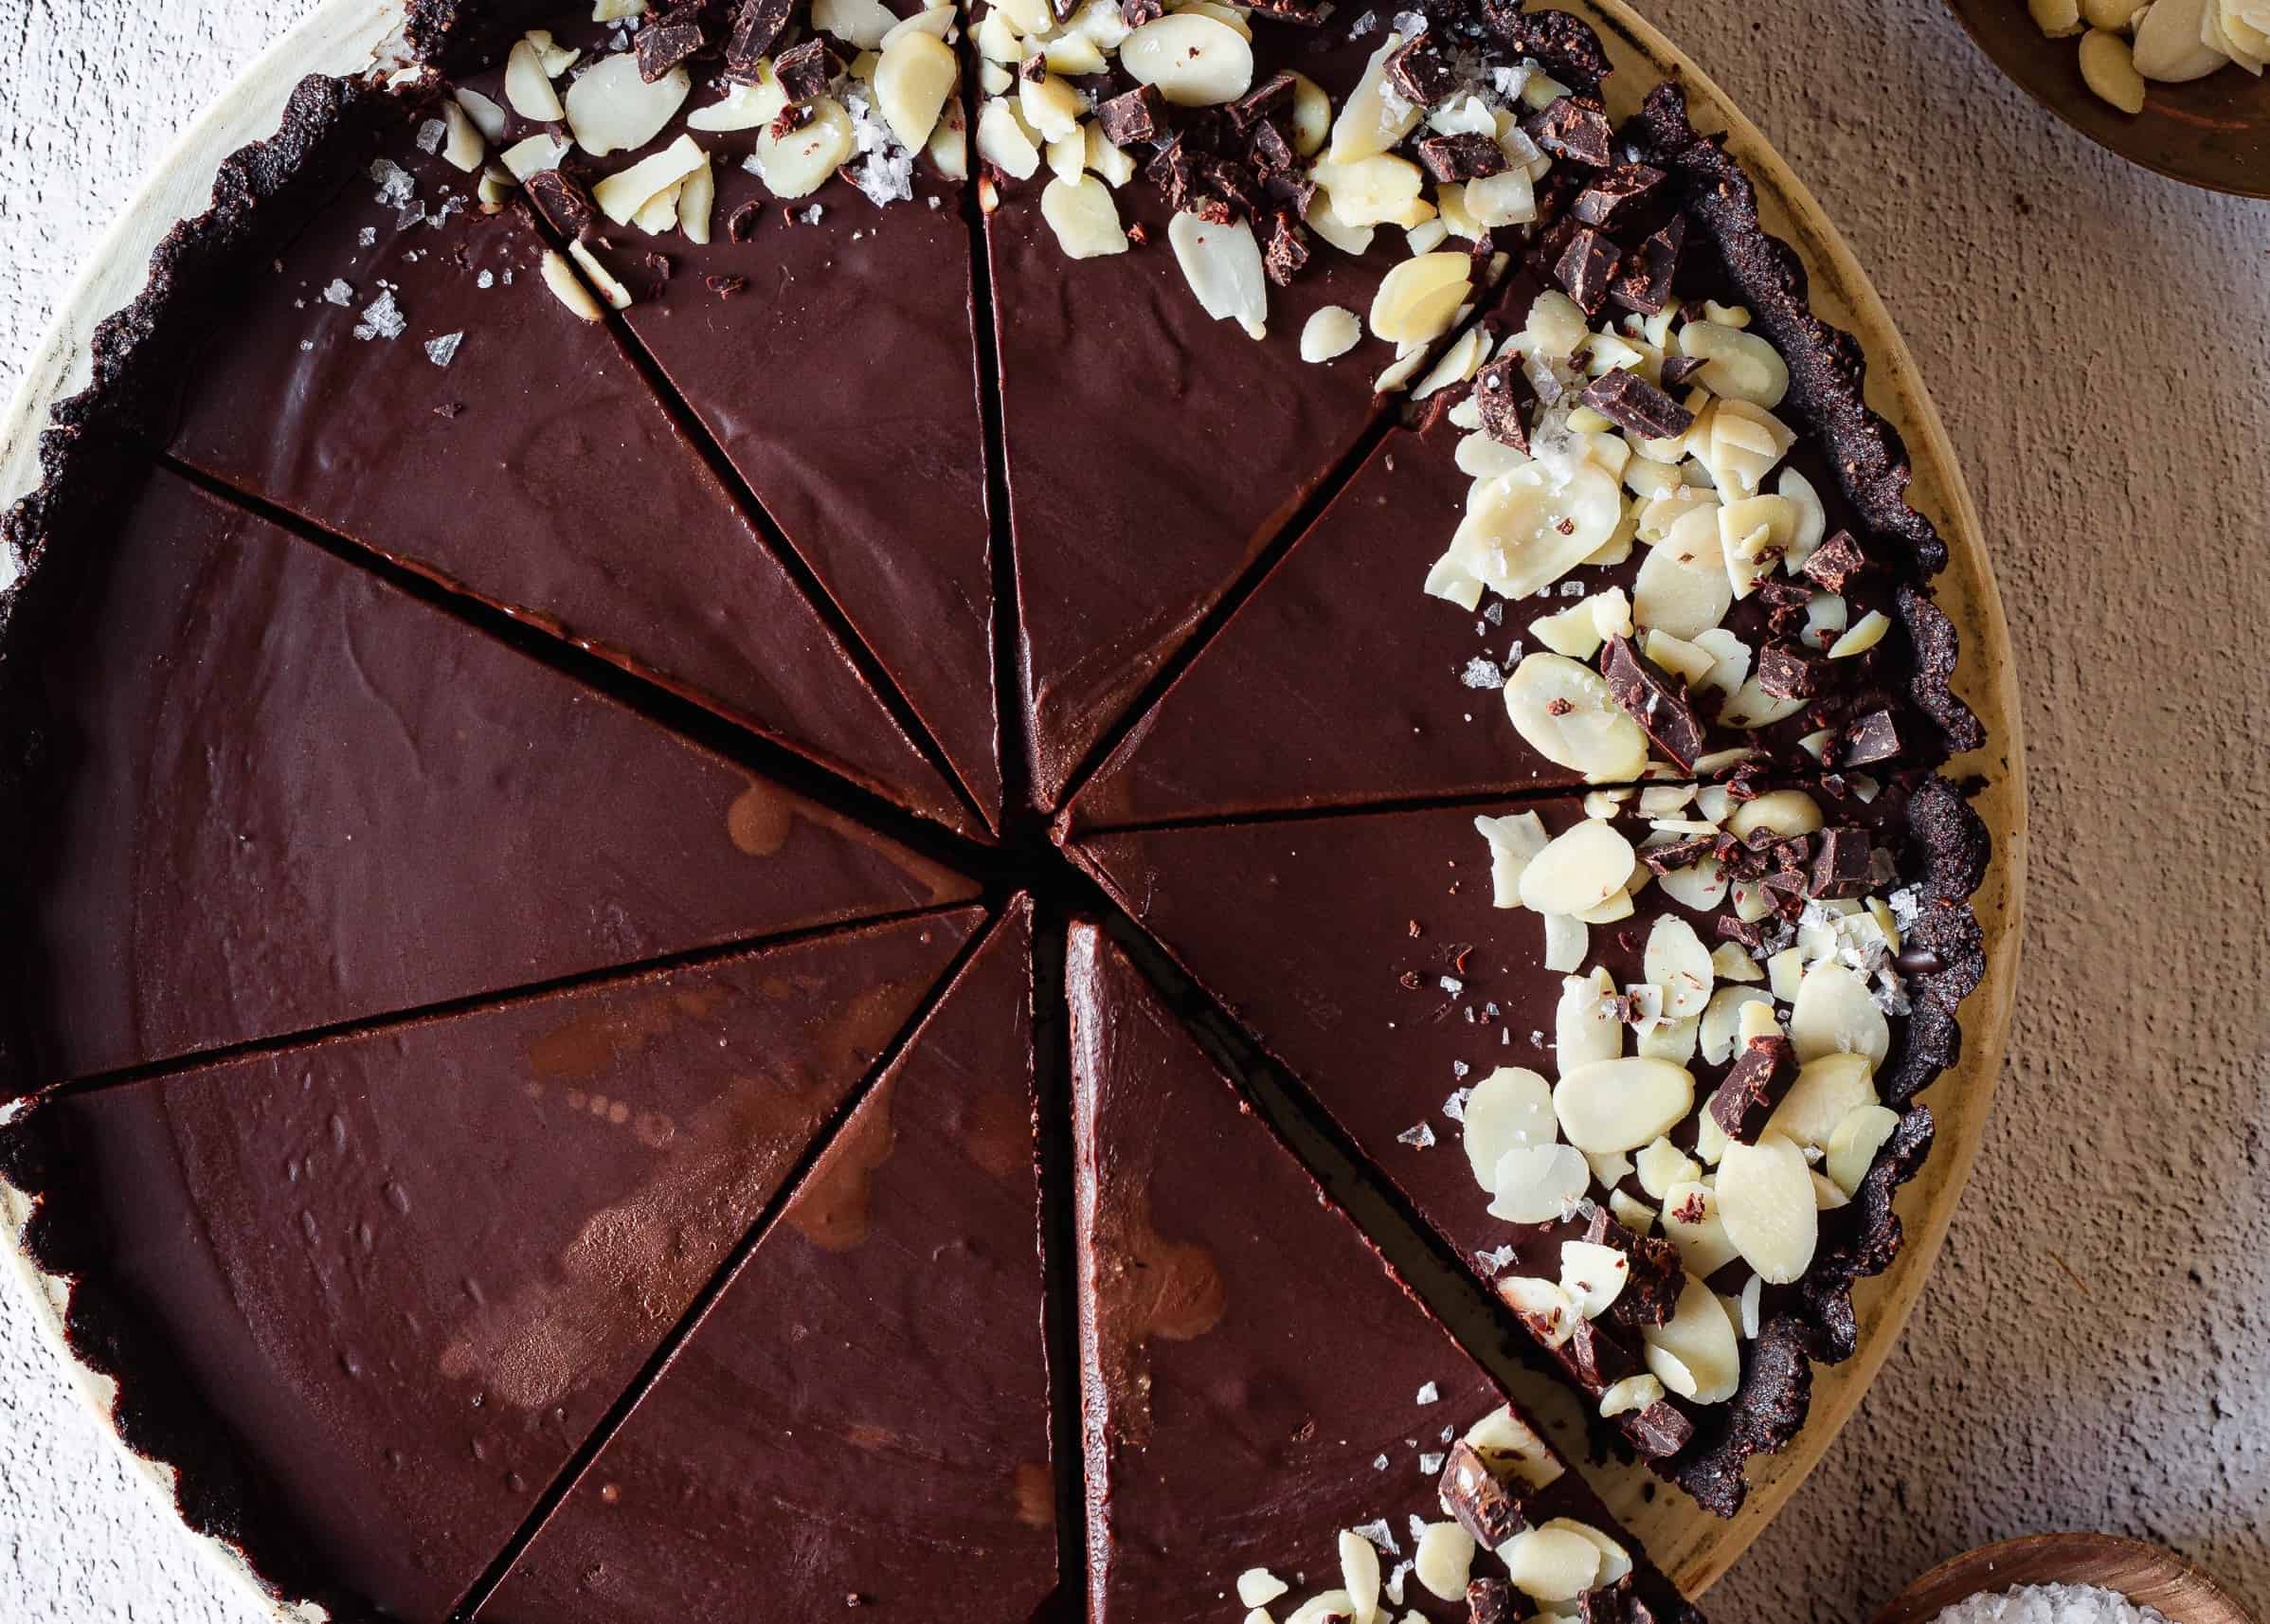 Chocolate tart sliced into pieces.